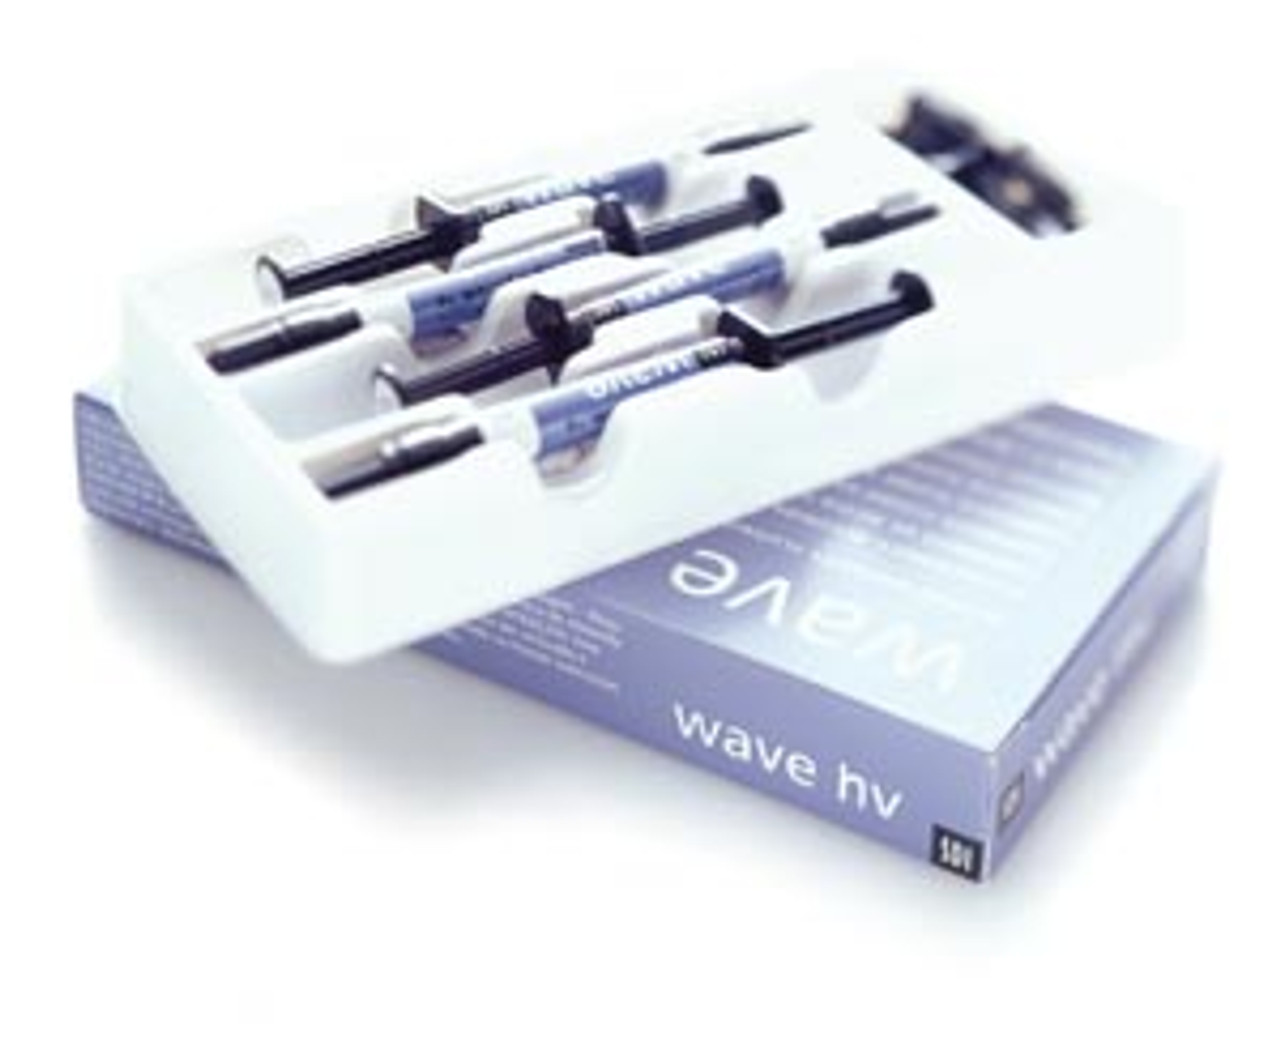 SDI Wave Flowable Composites, Wave HV Syringe Refill - Shade B1 Light, 1 x 1g Syringe, 5 Applicator Tips 8211101